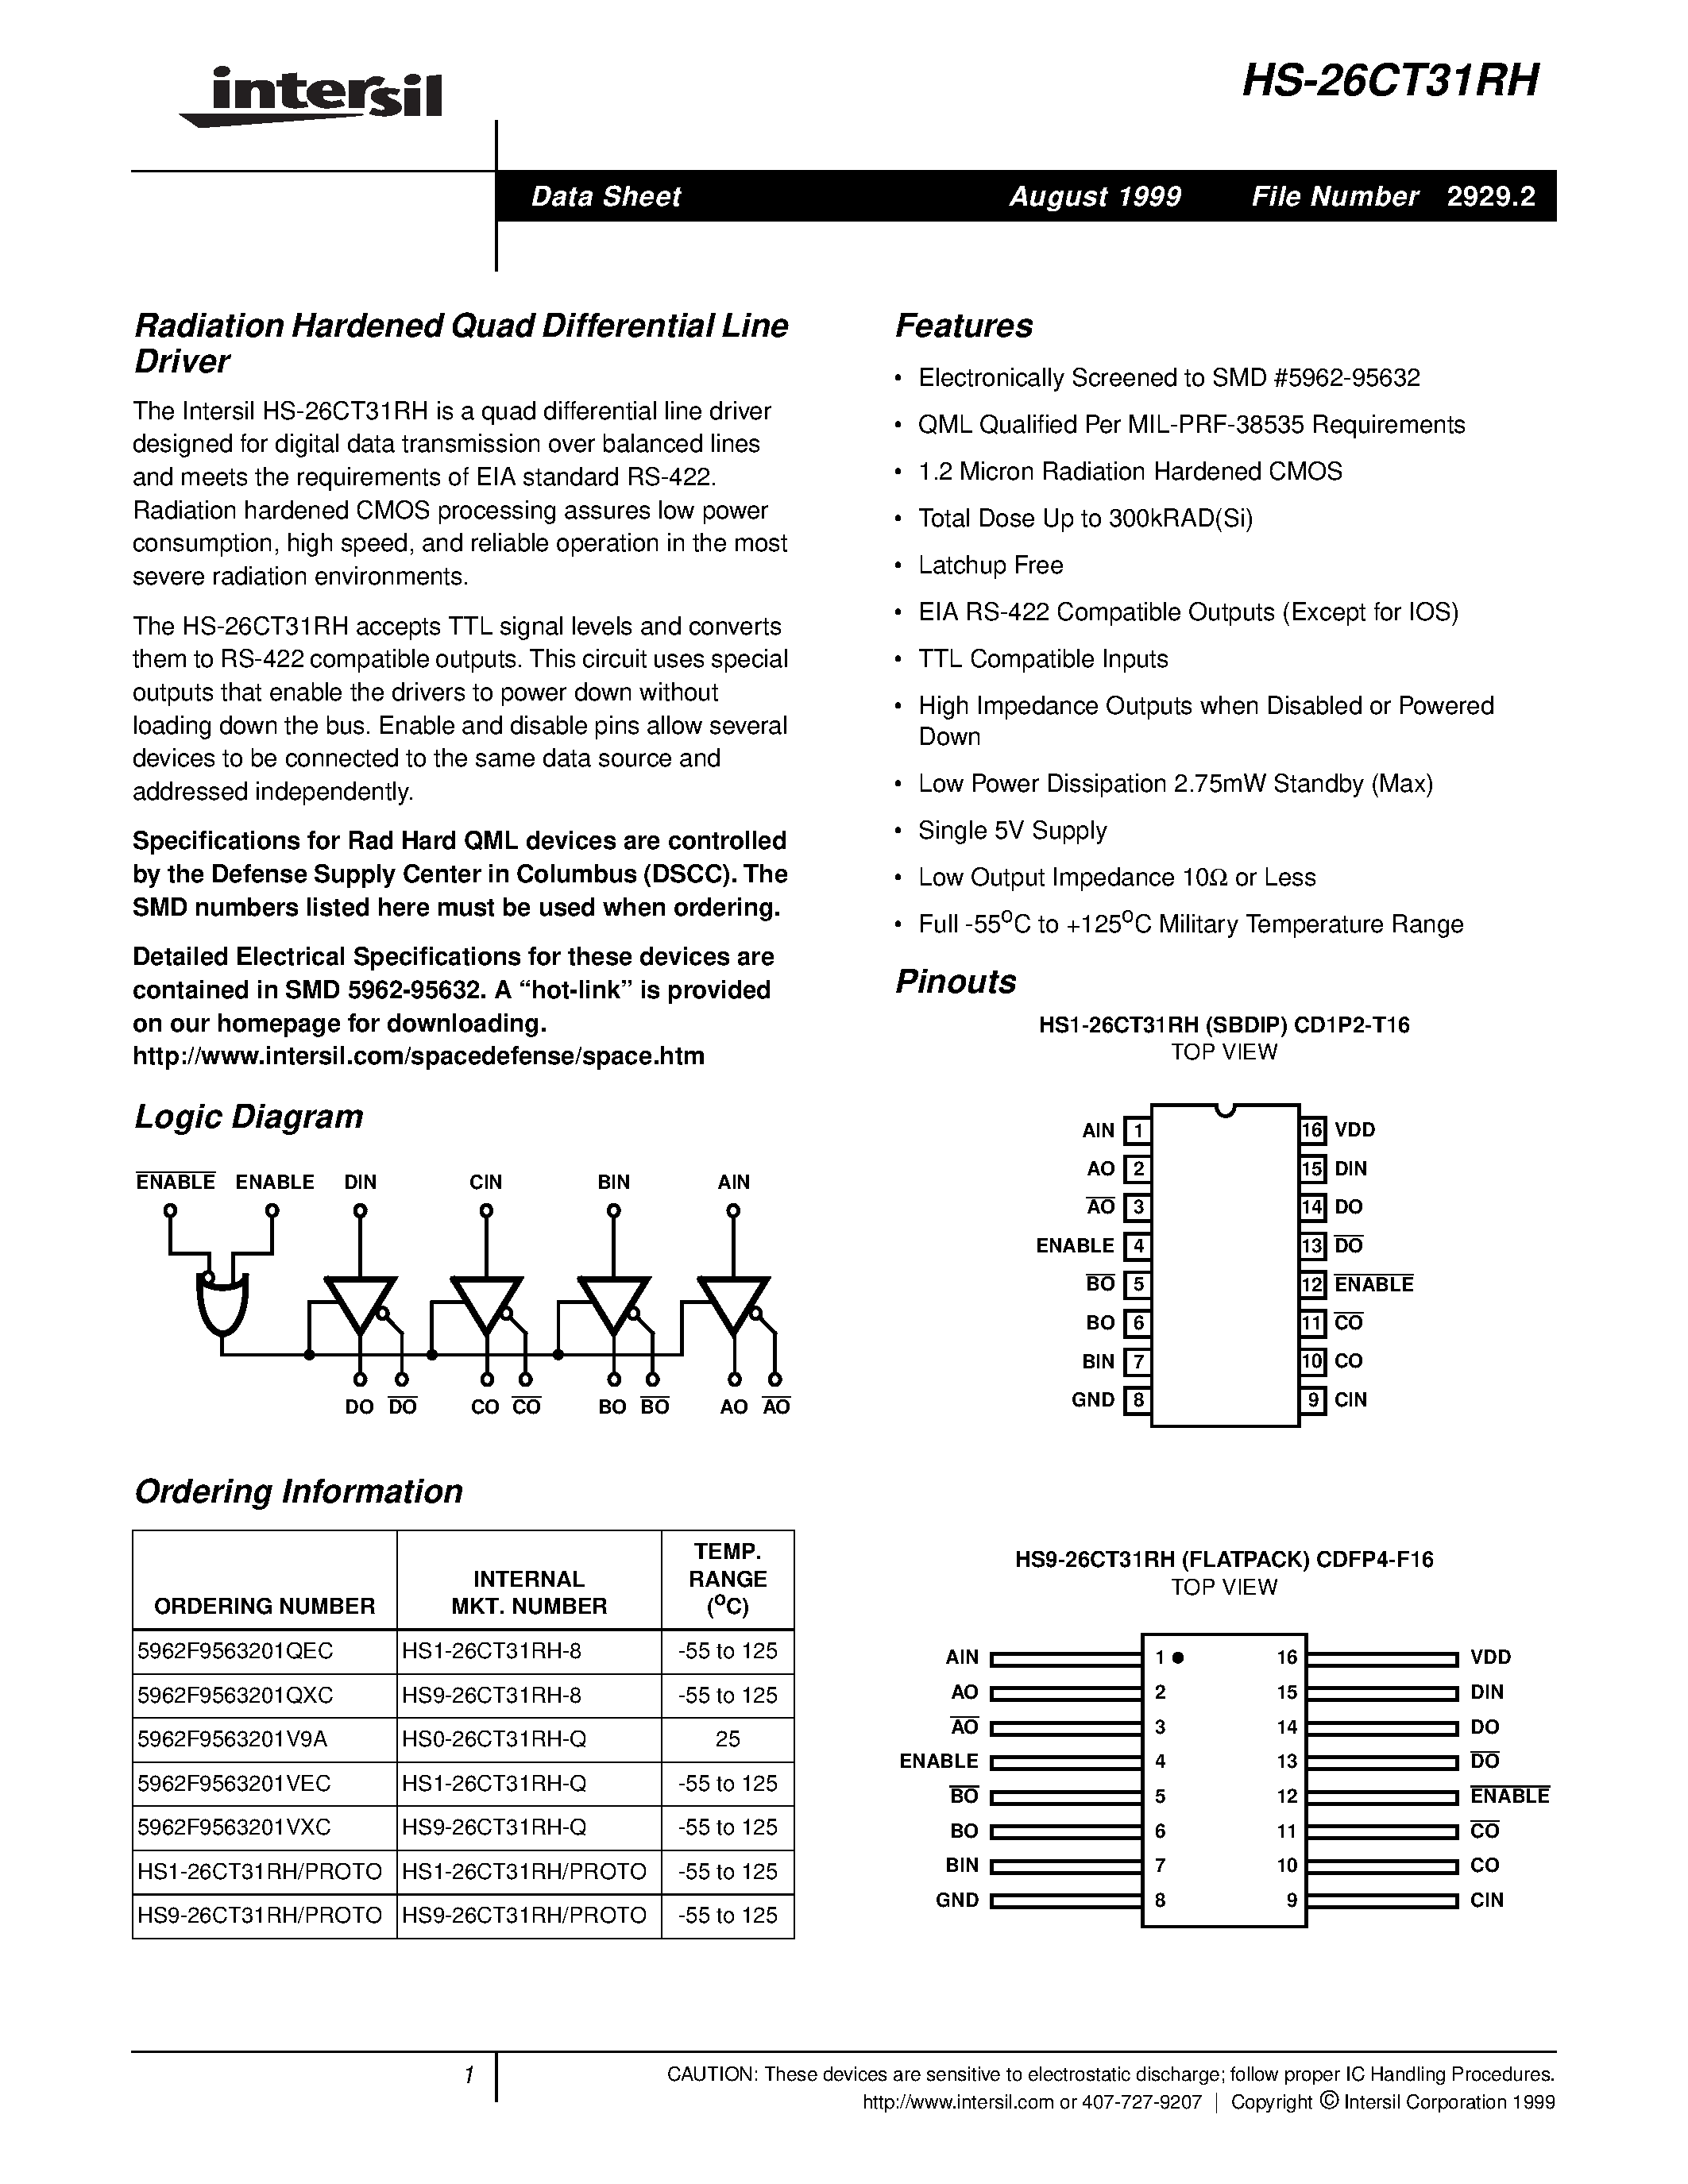 Даташит HS0-26CT31RH-Q - Radiation Hardened Quad Differential Line Driver страница 1